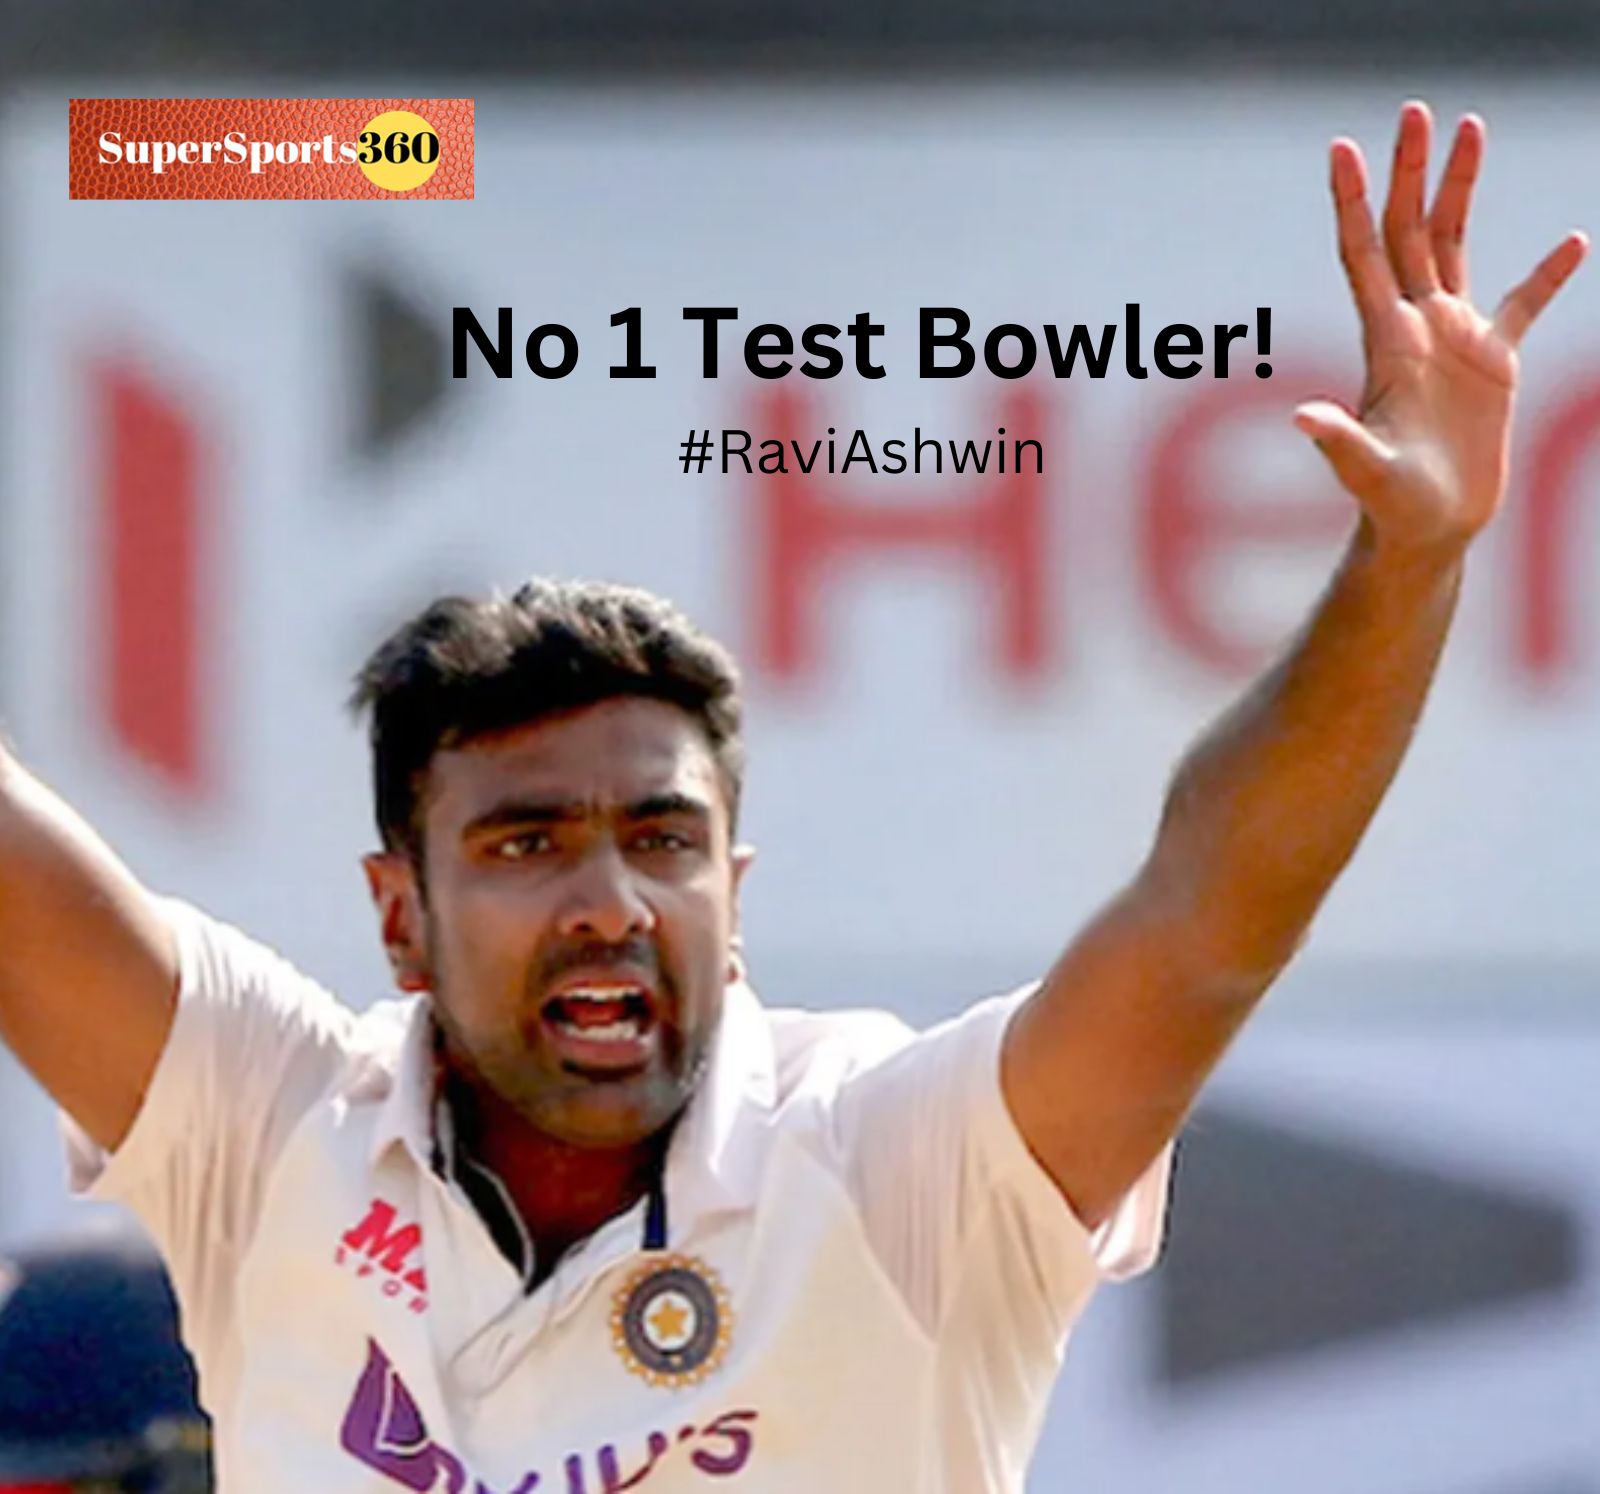 Ravichandran Ashwin is the new No 1 Test Bowler